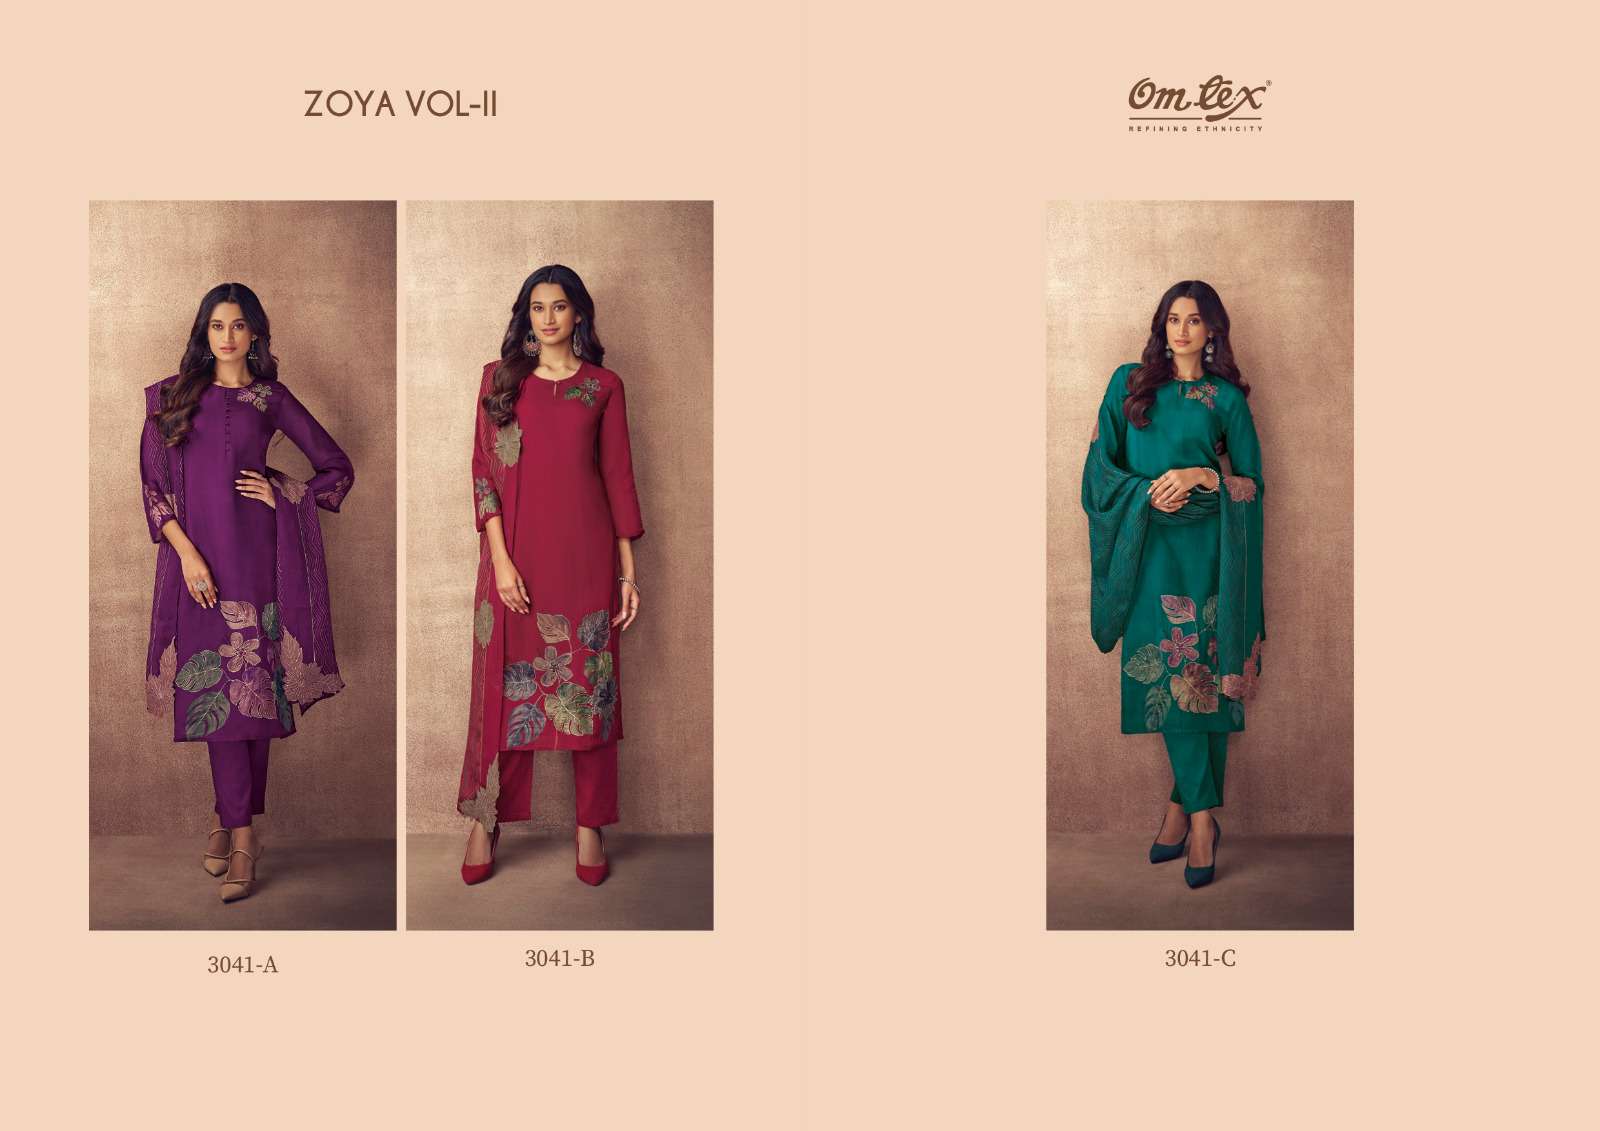 om tex zoya vol-2 3041 colour series latest designer wedding wear muslin salwar kameez wholesale price surat